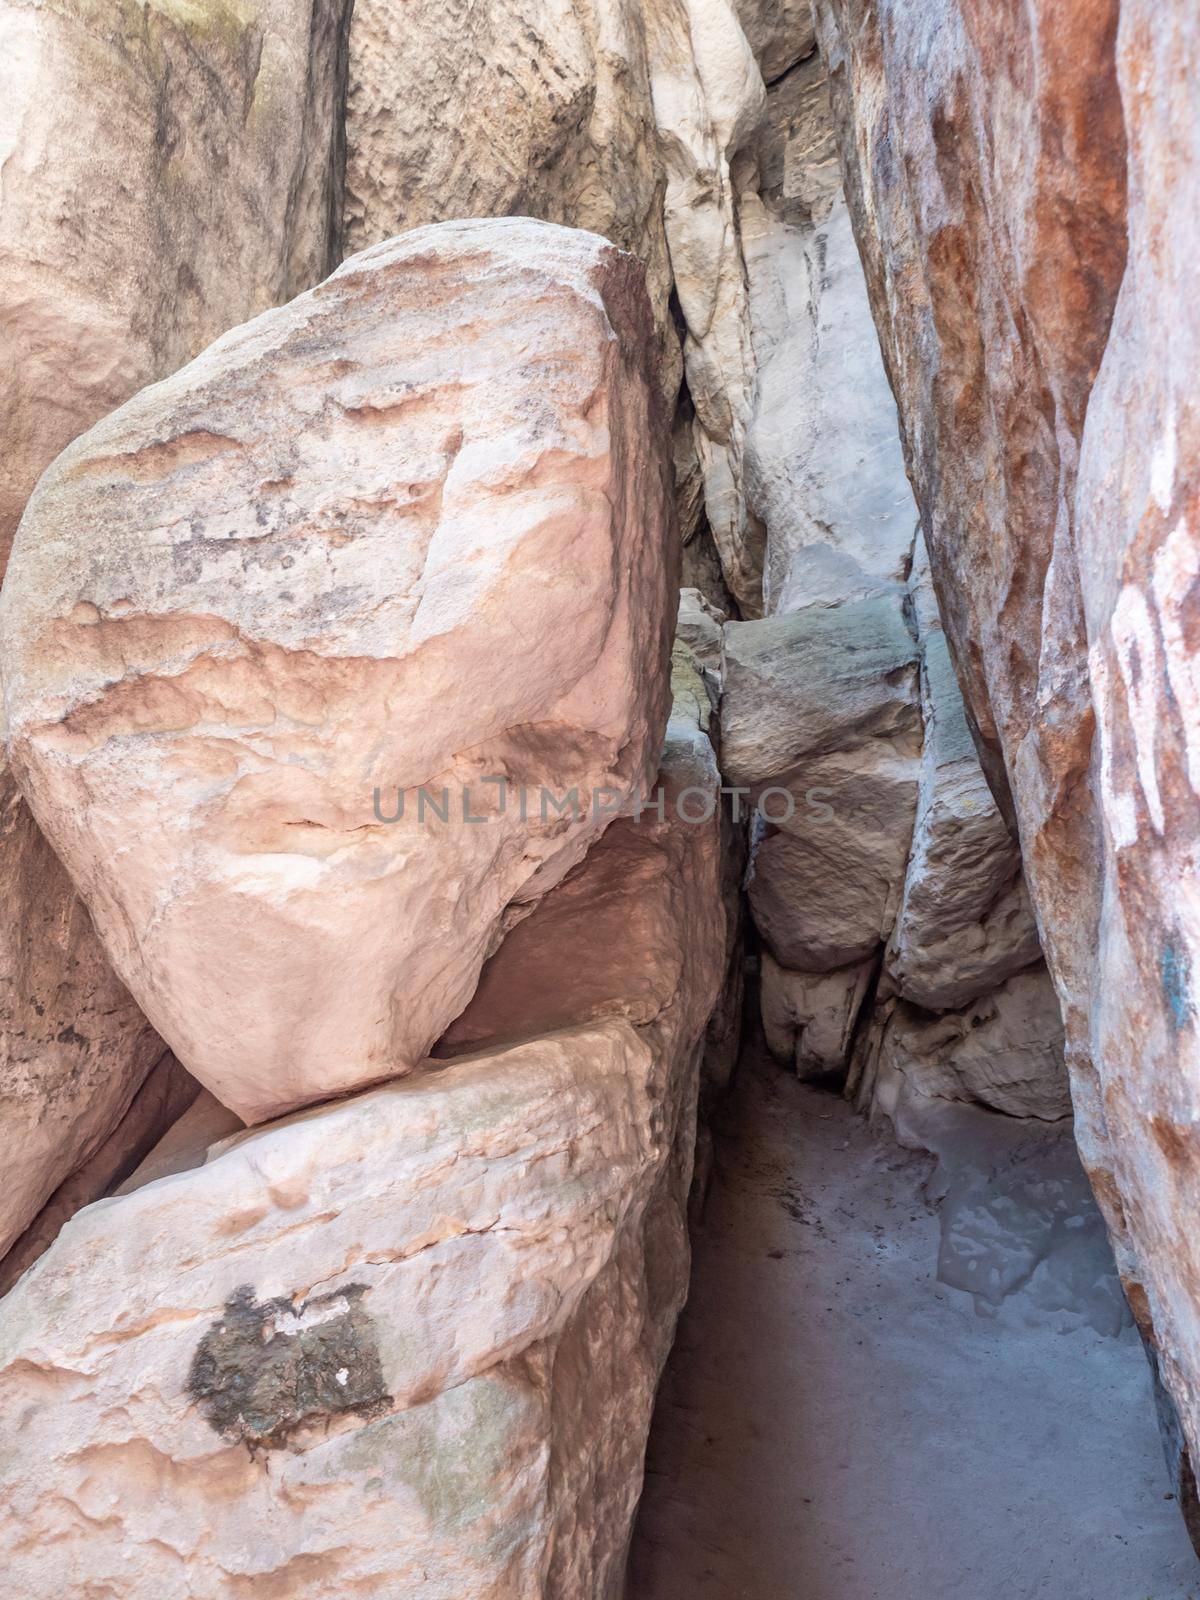 Narrow passage between big rocks in stone labyrinth Ostas rocks by rdonar2